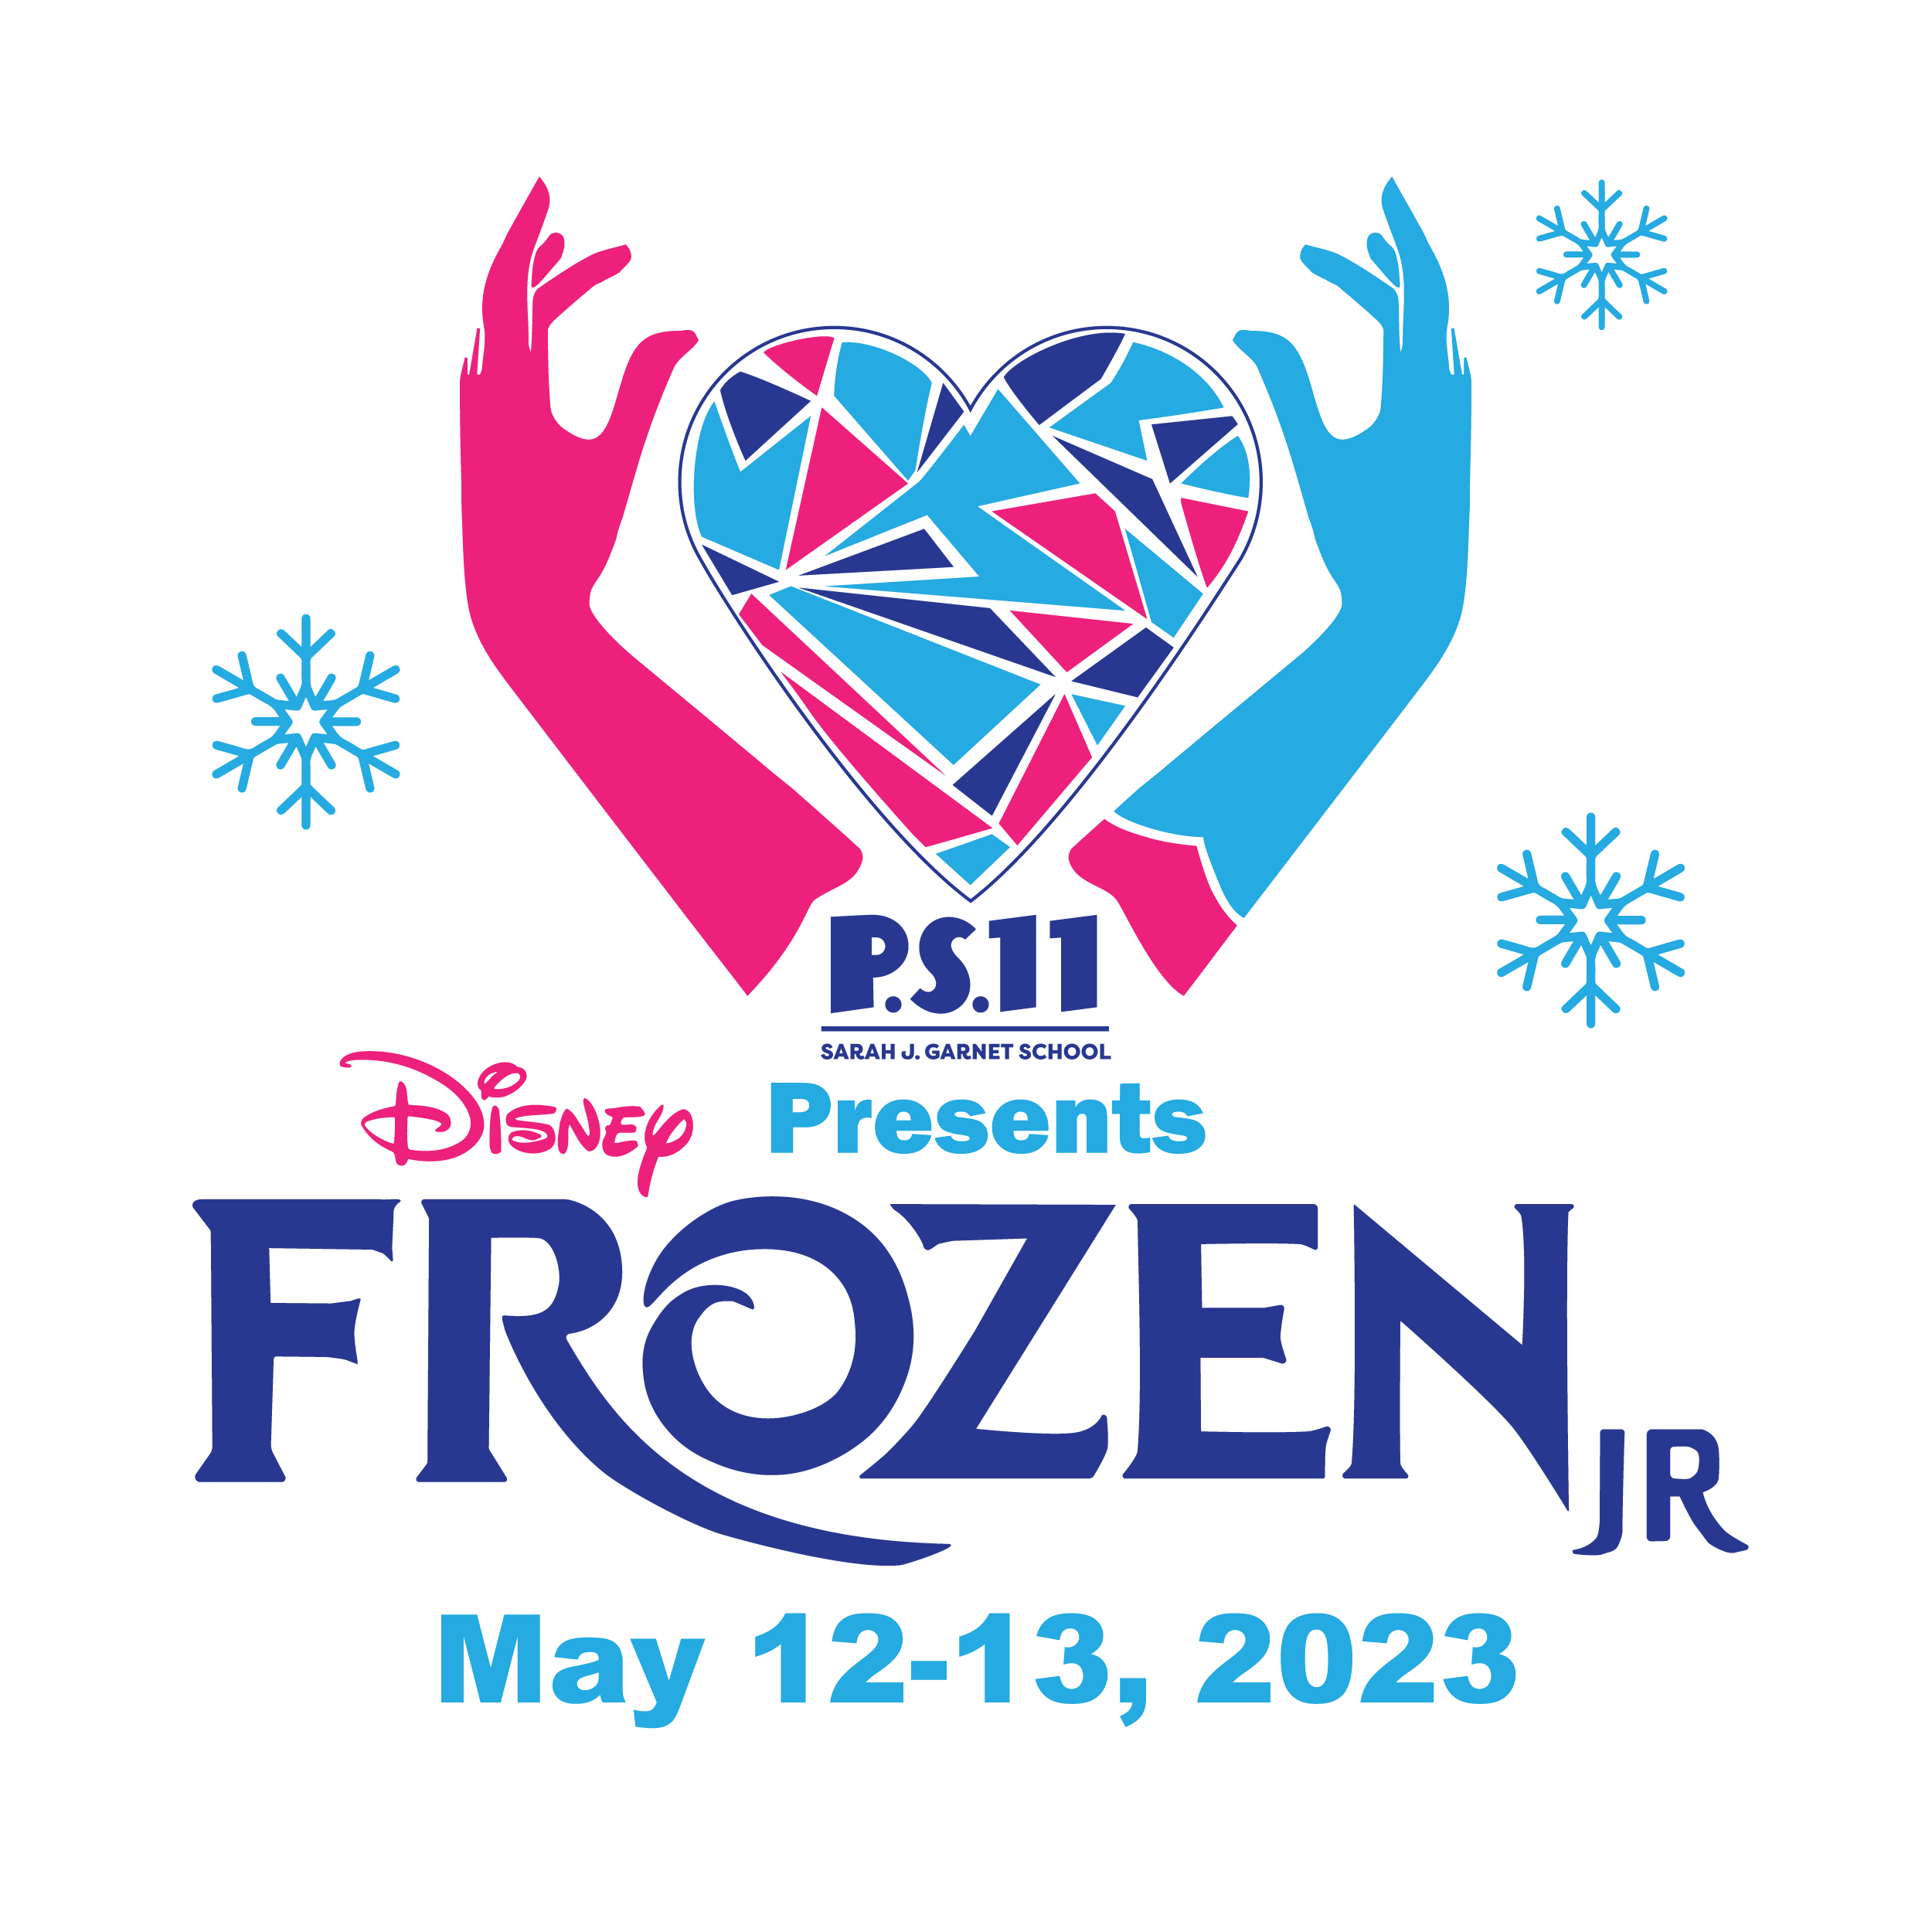 Disney Presents Frozen Jr May 12-13, 2023